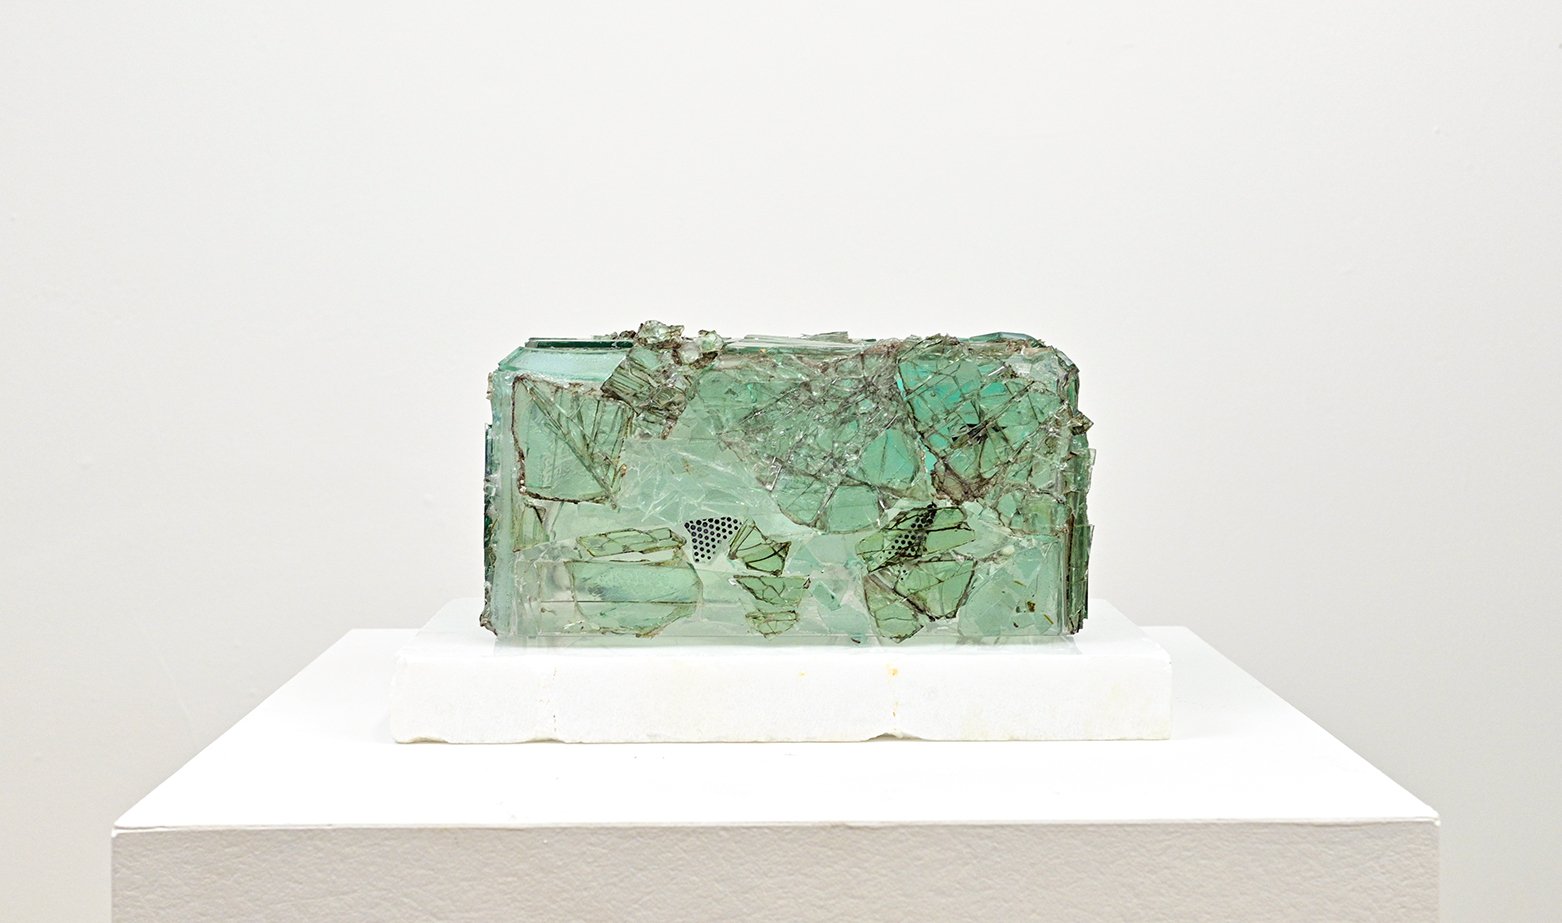   Satori , Salvaged automobile windshield glass (1940s-2010) and acrylic on raw cut found marble slab. 10” x 6” x 5½”    